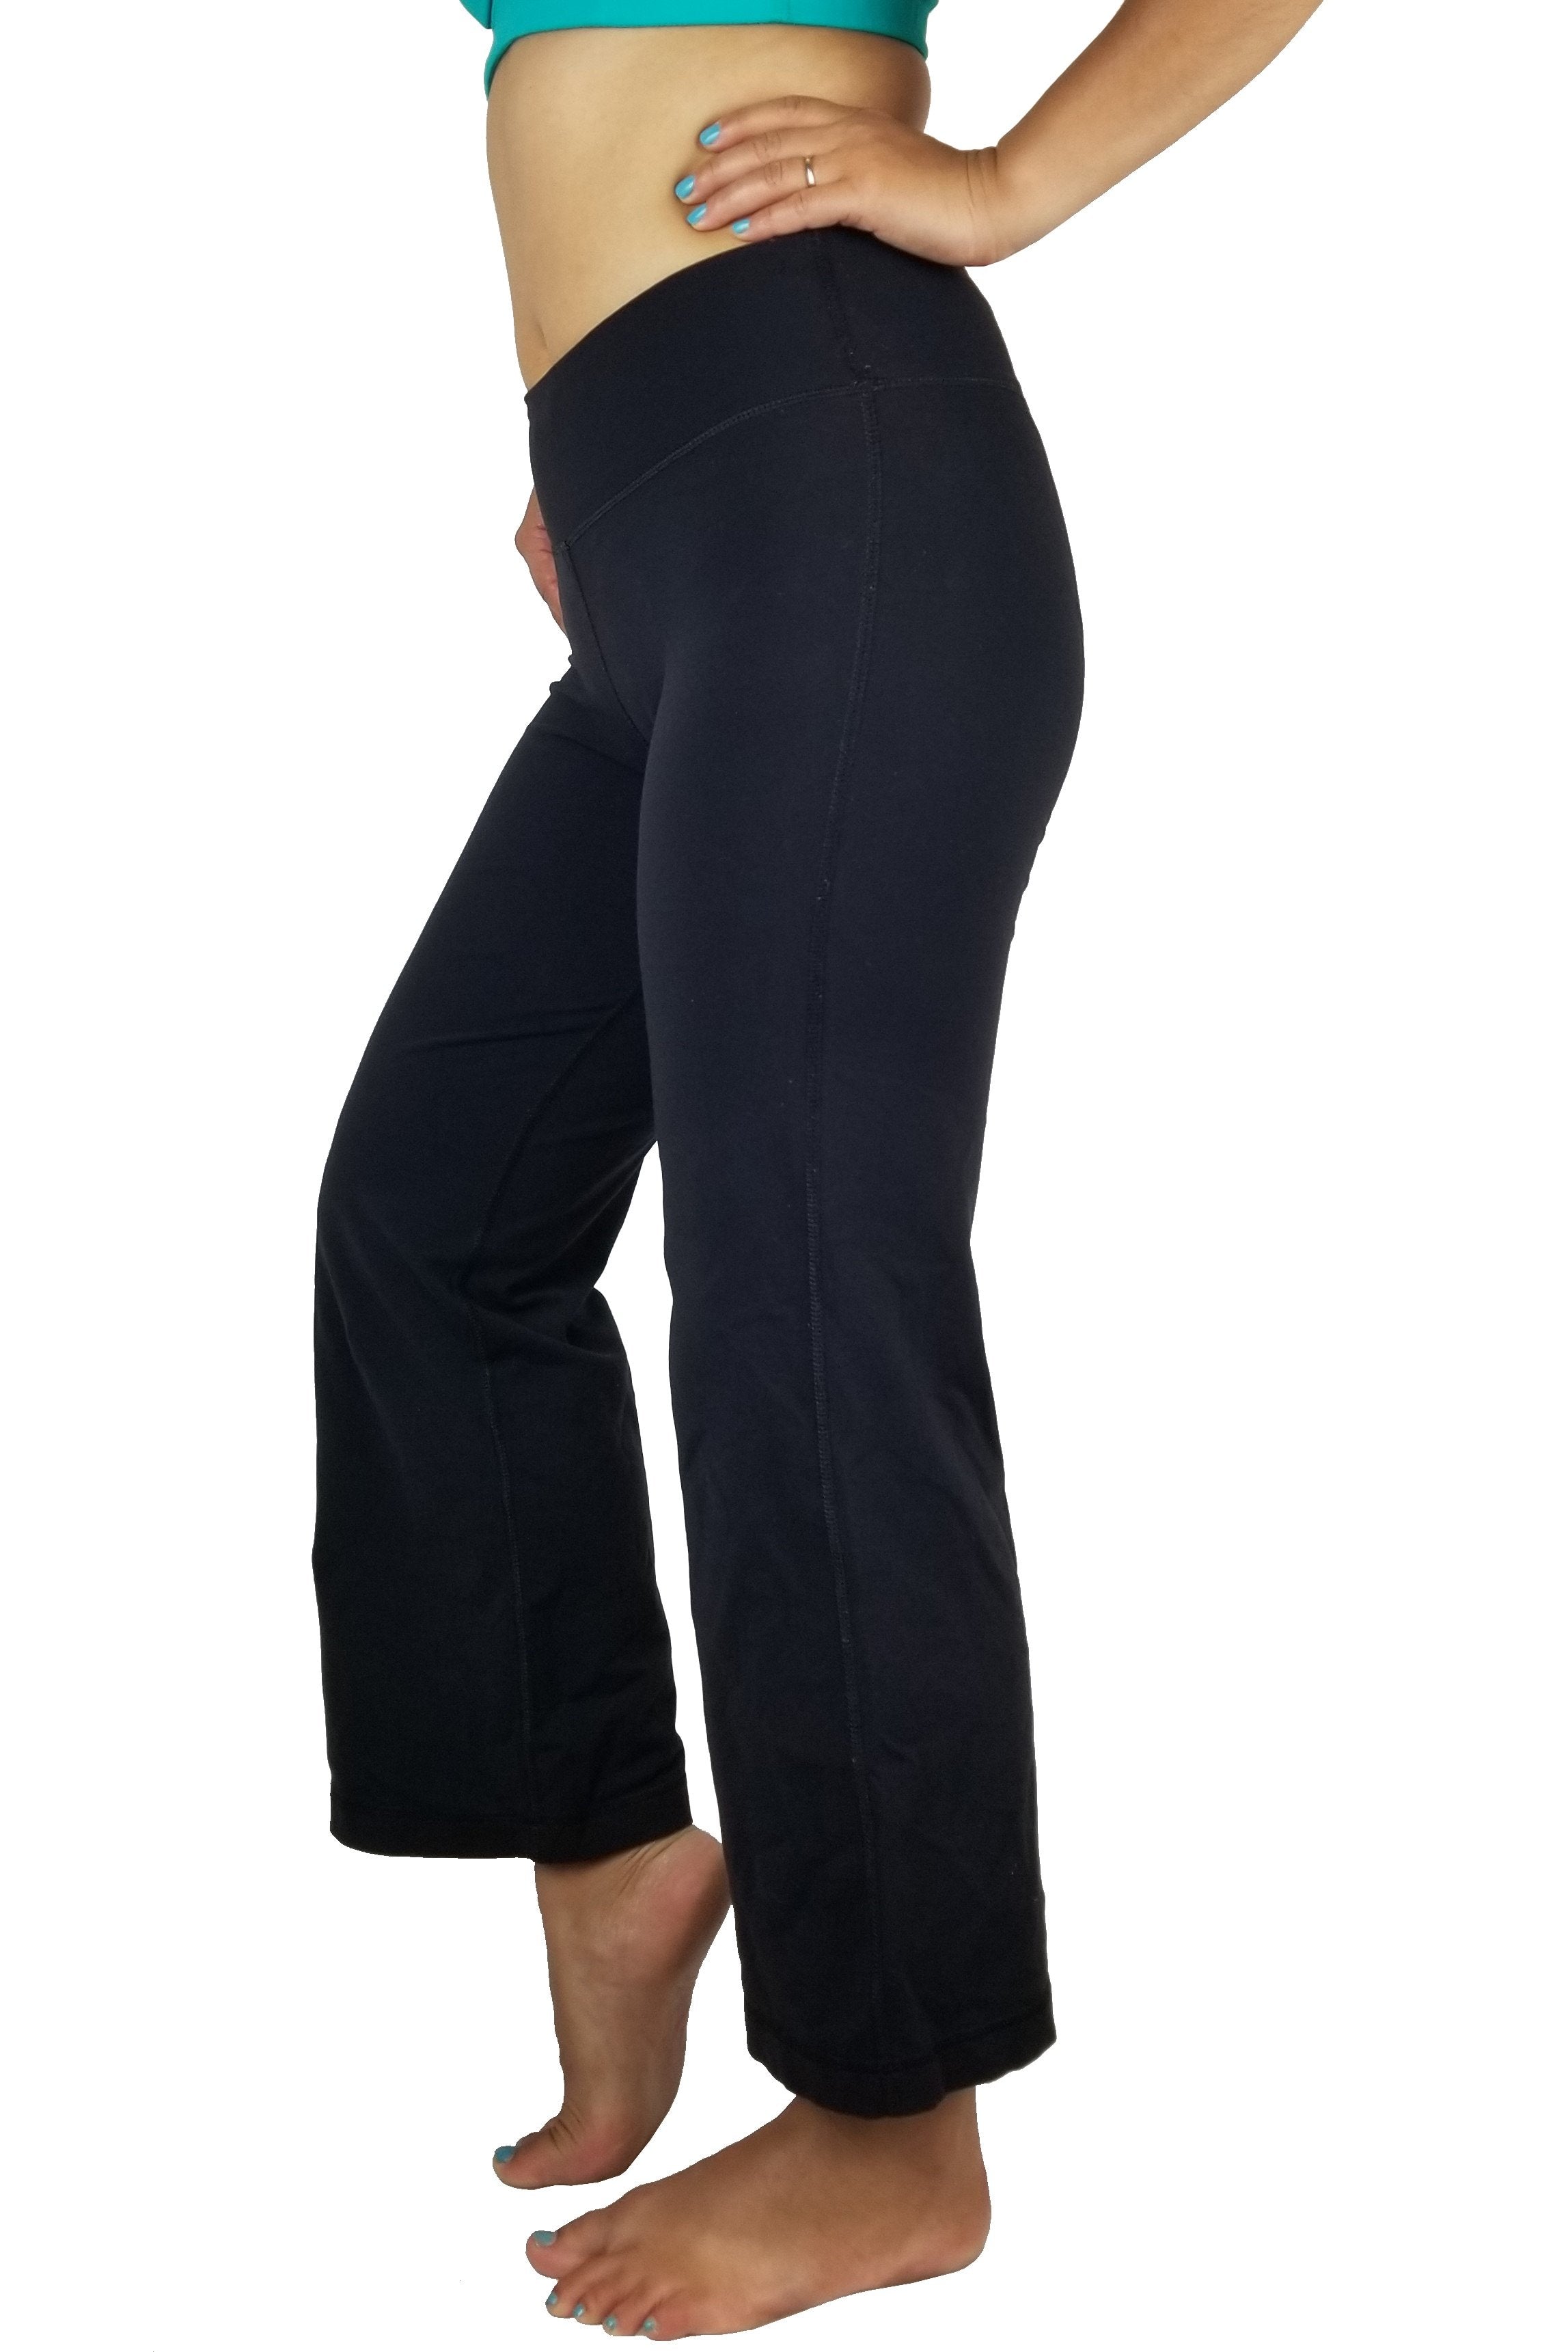 Black Flare Yoga Pants, Yoga & Comfort